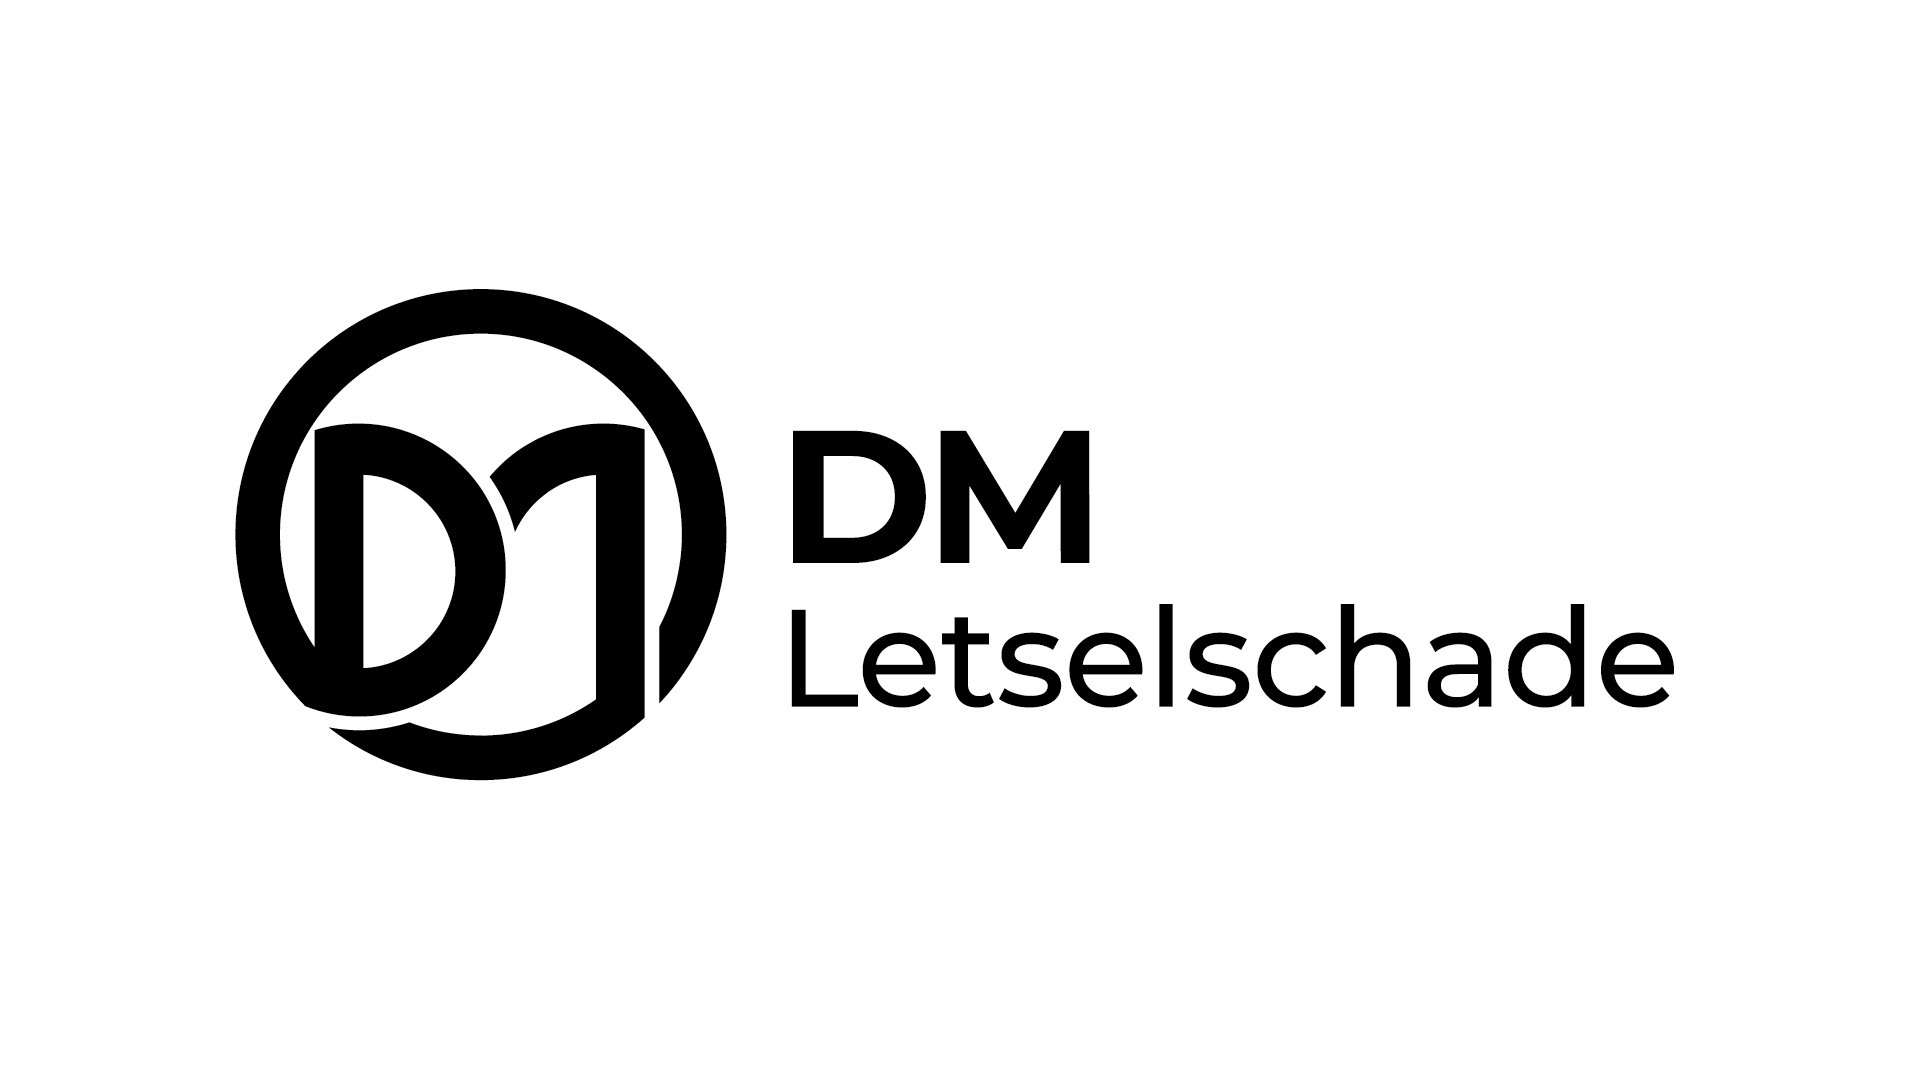 DM Letselschade logo 3